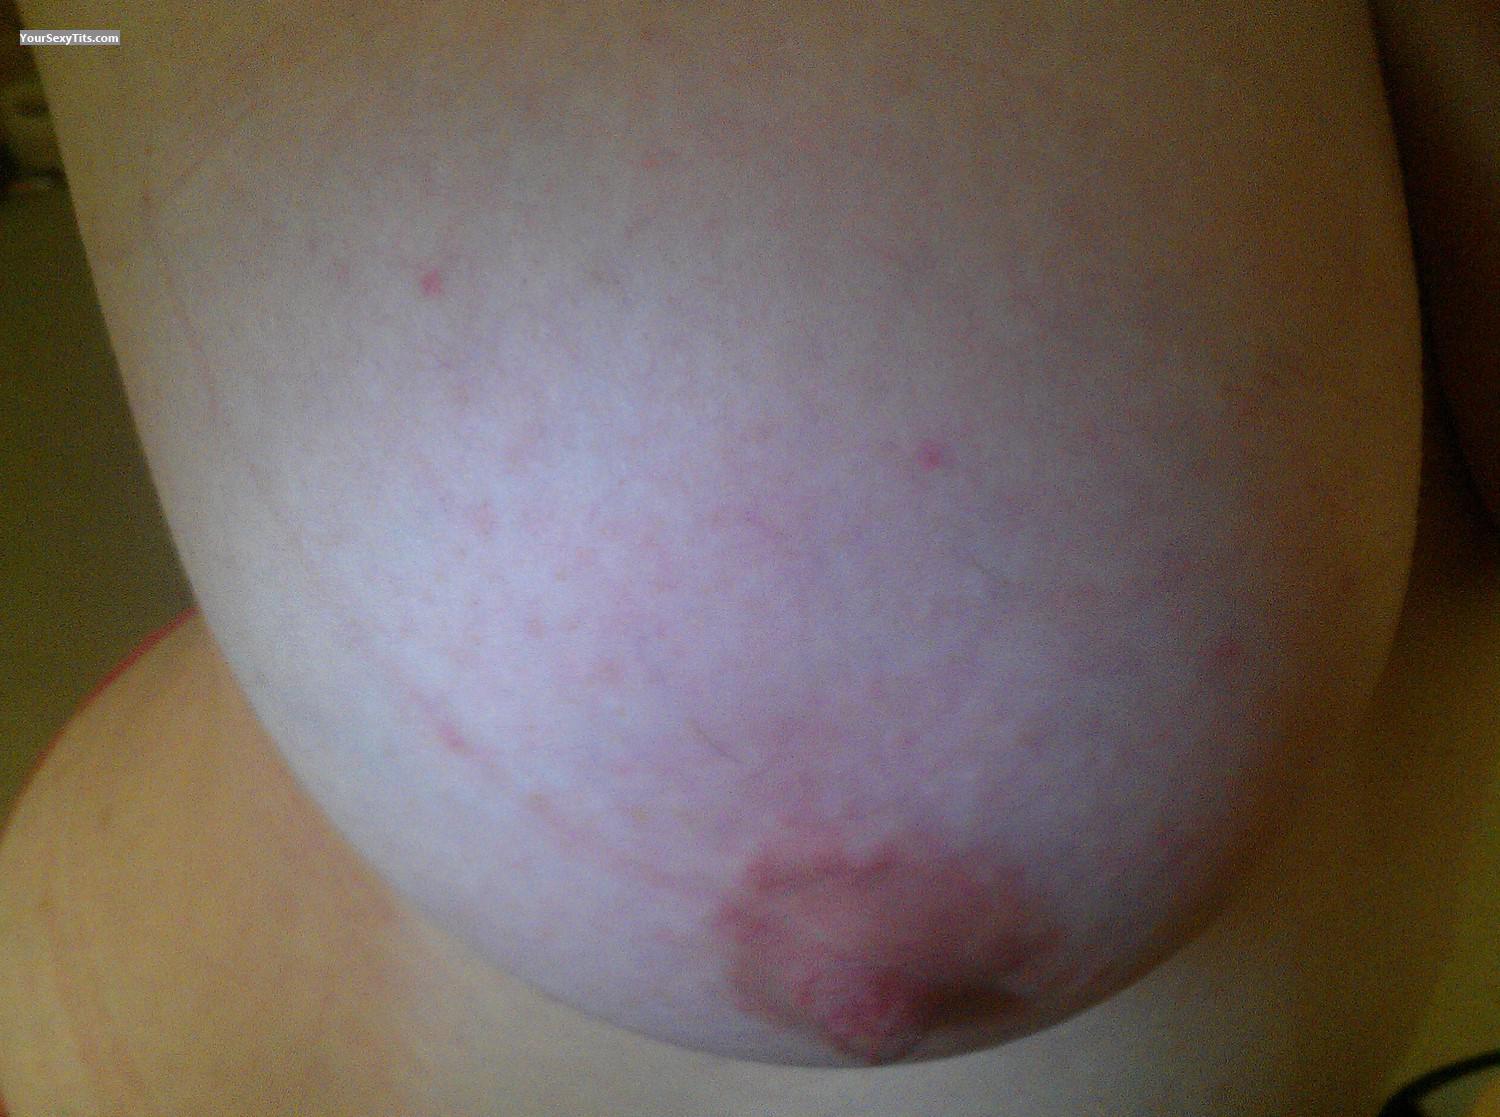 My Very big Tits Selfie by LMC-GG